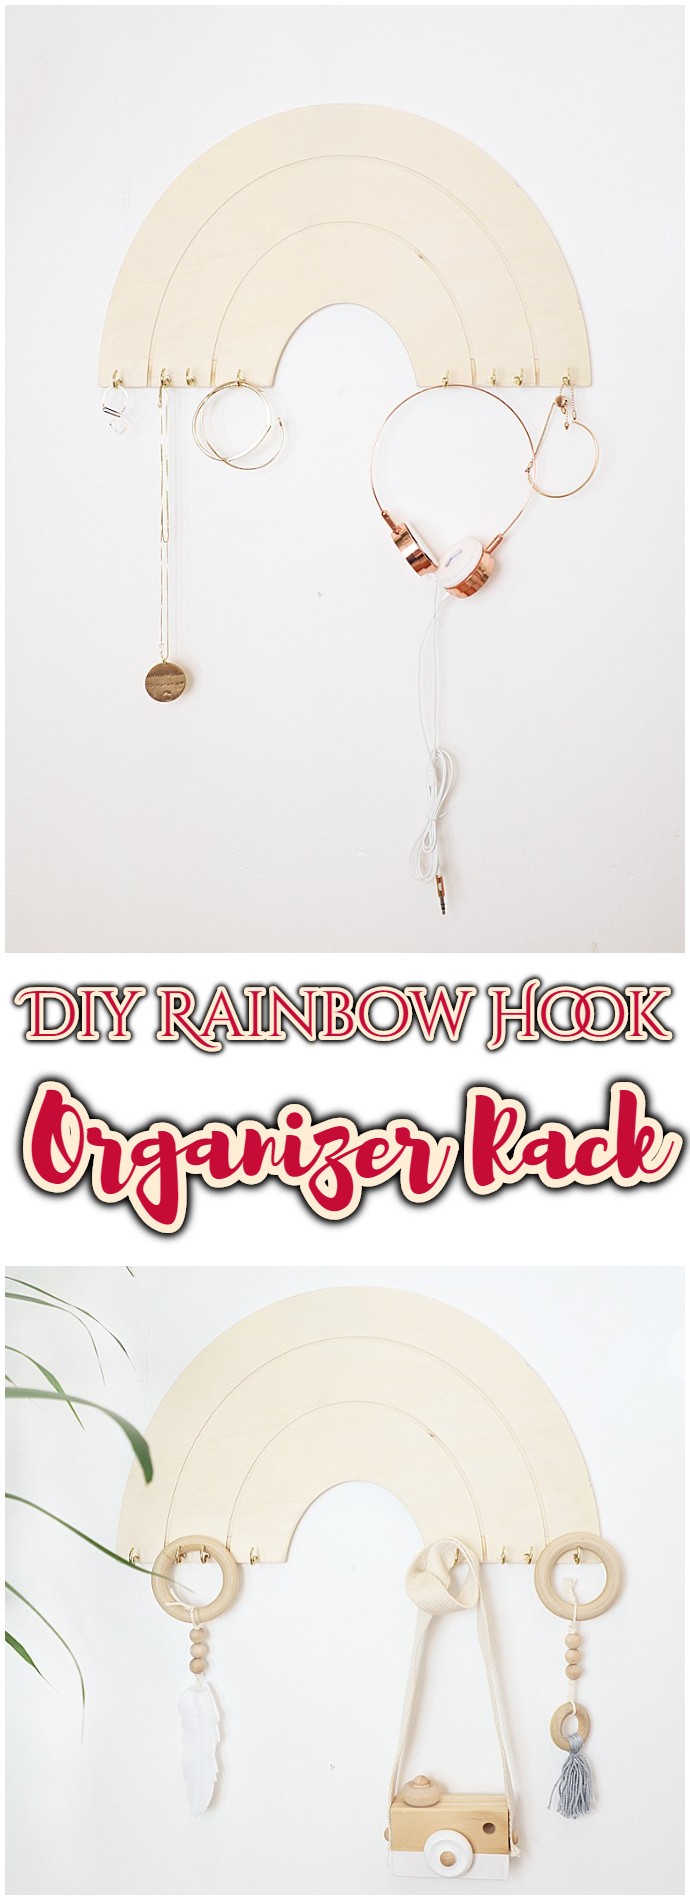 Diy Rainbow Hook Organizer Rack